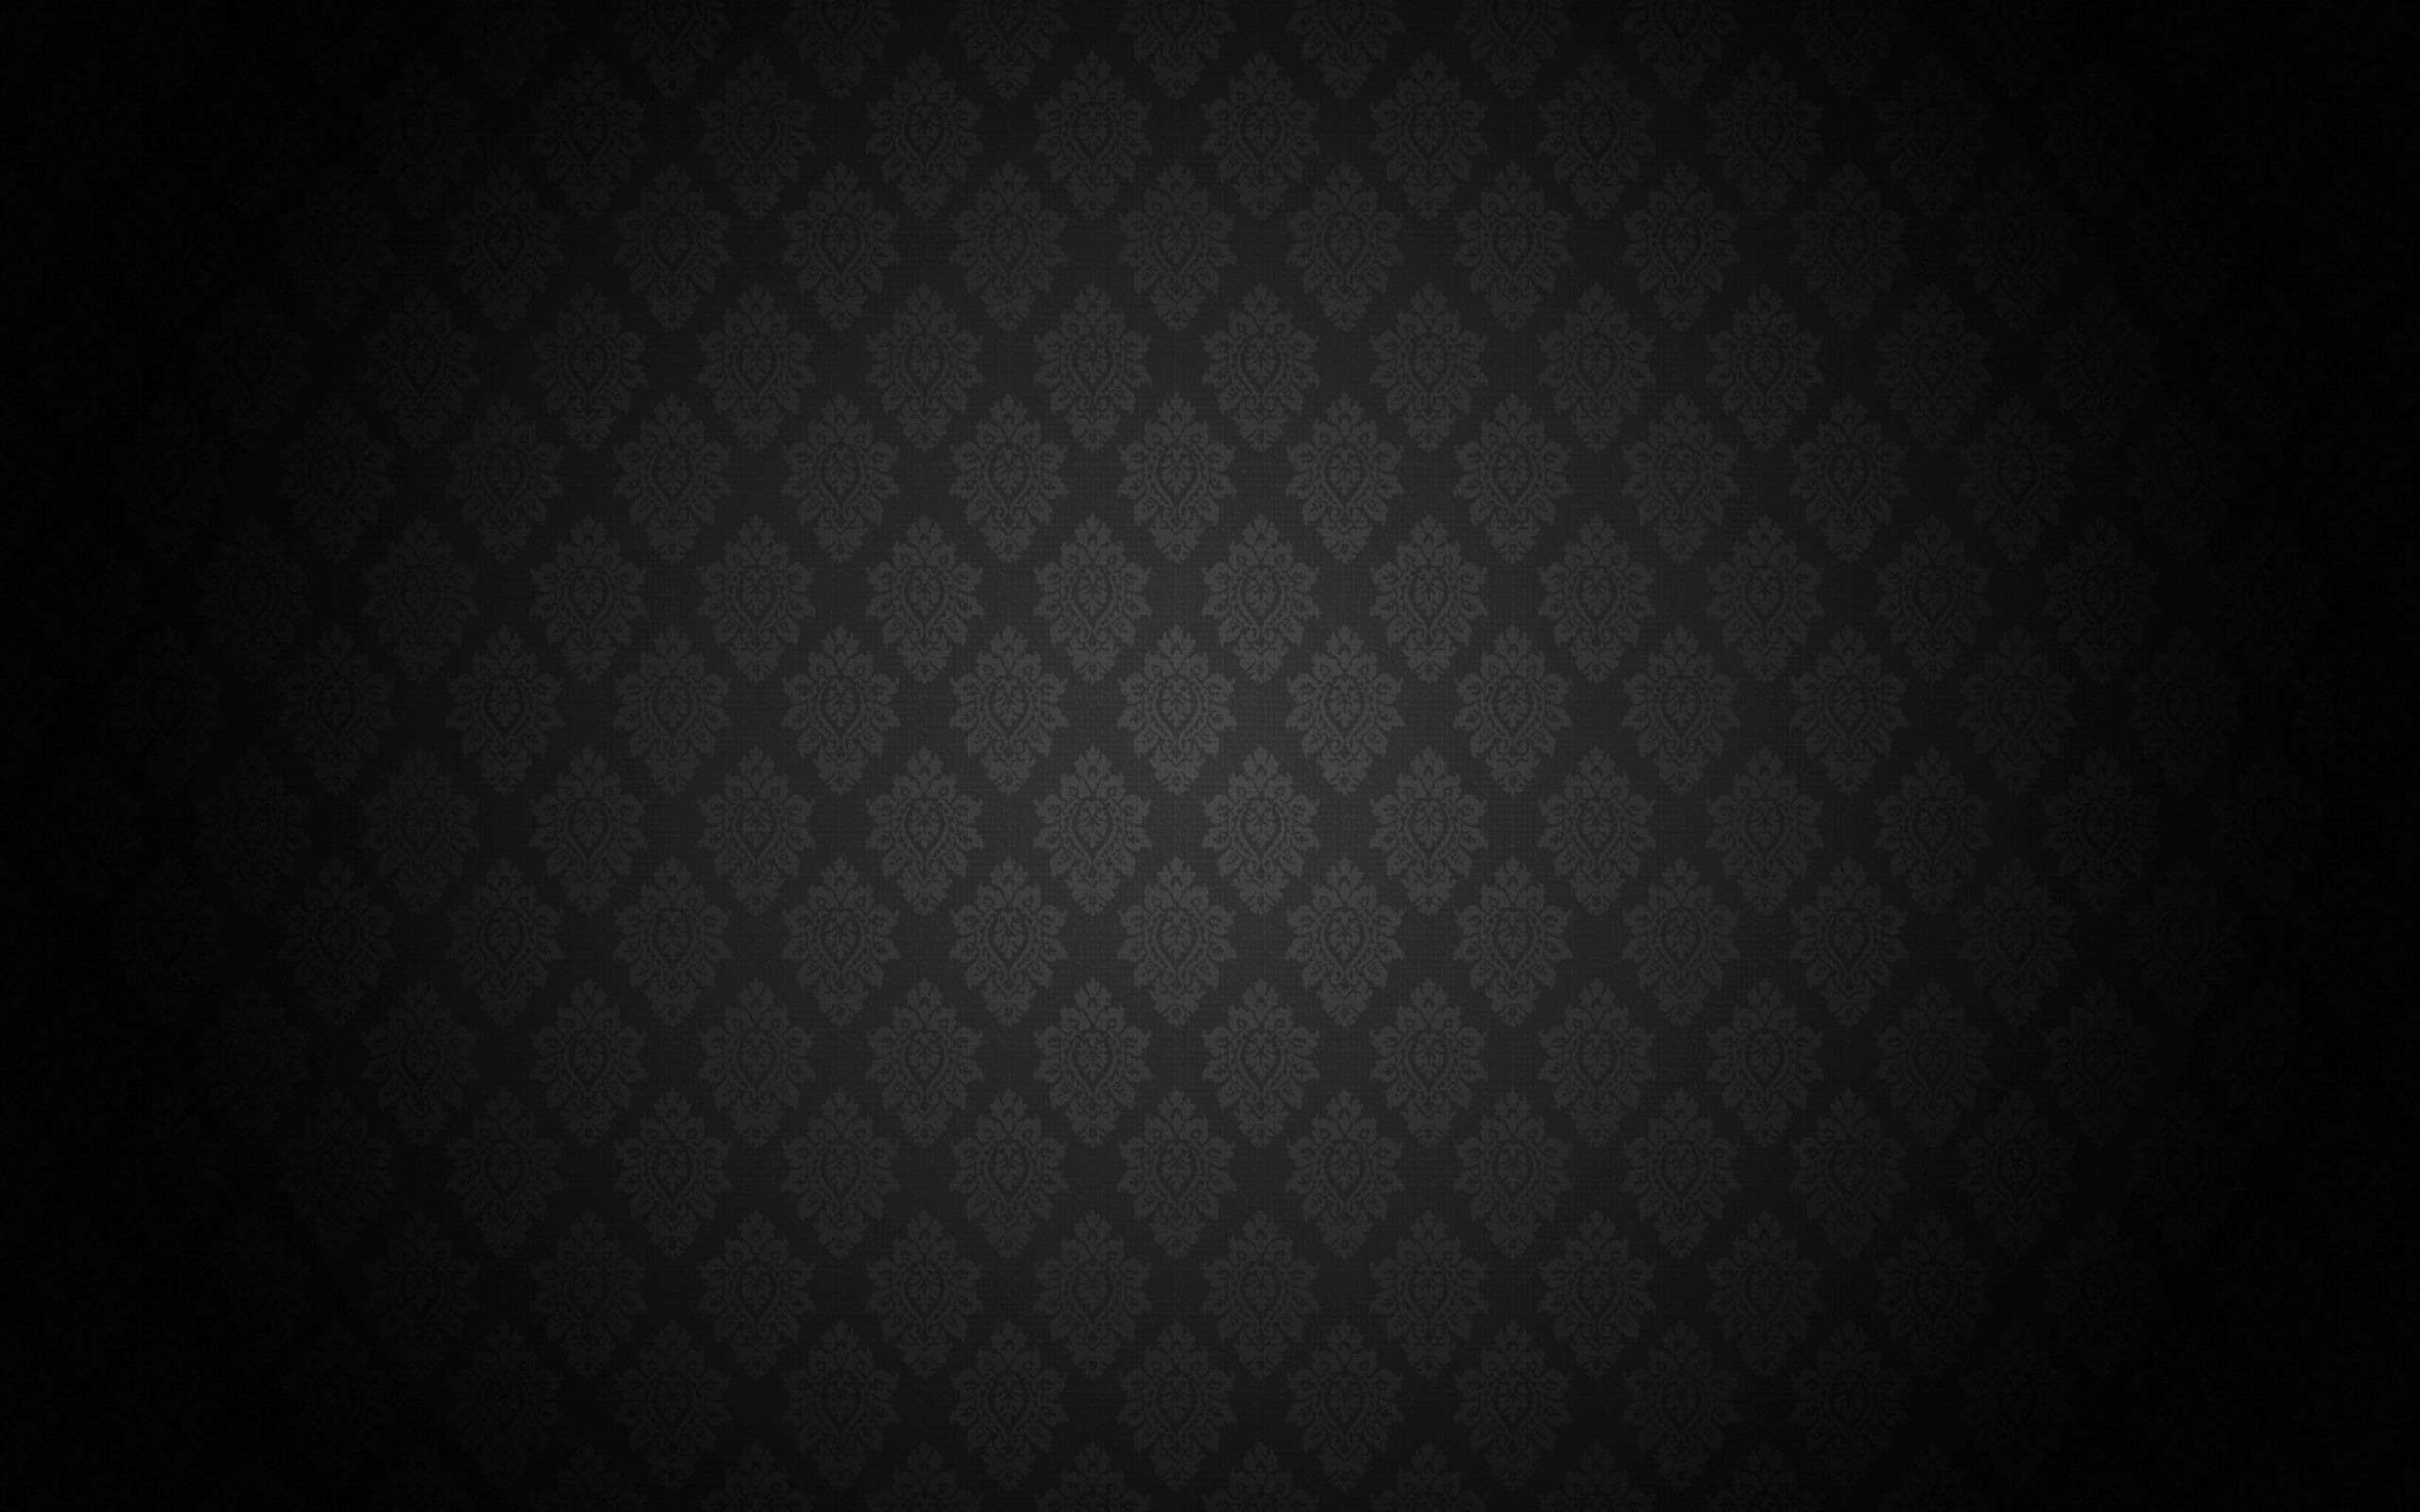  Black and White Pattern Background hd wallpaper background desktop 2560x1600